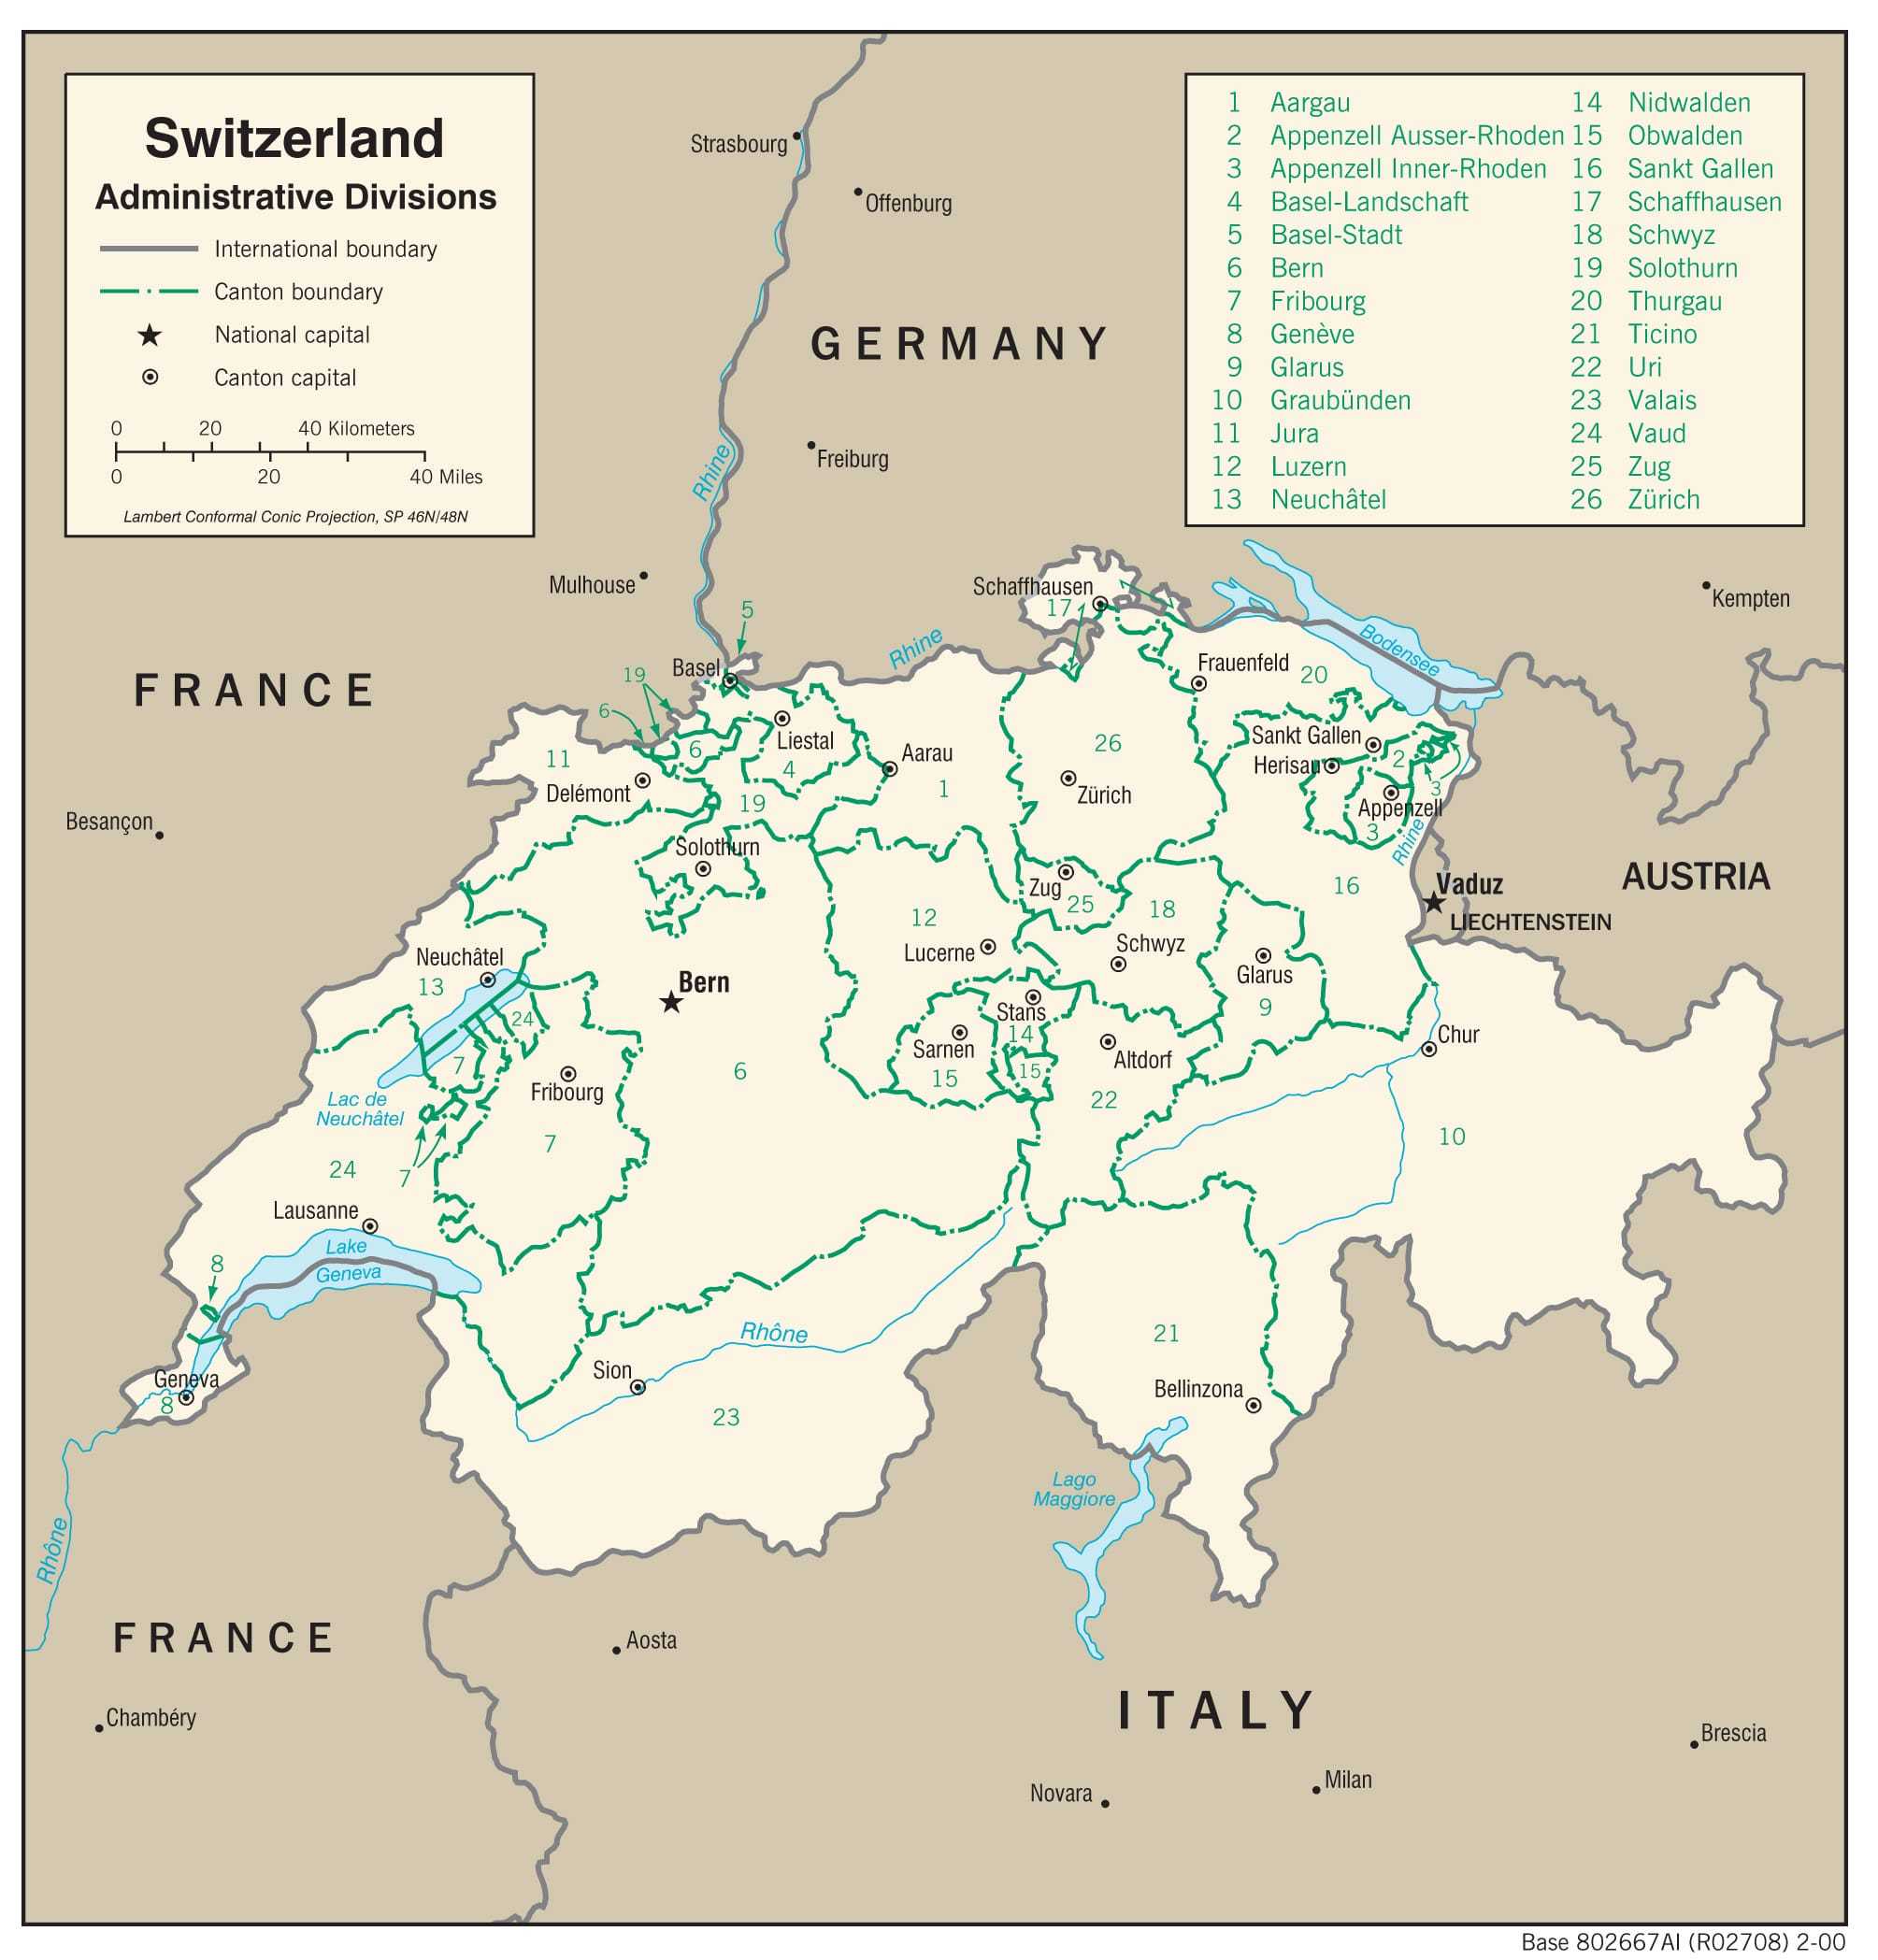 Administration map of Switzerland.